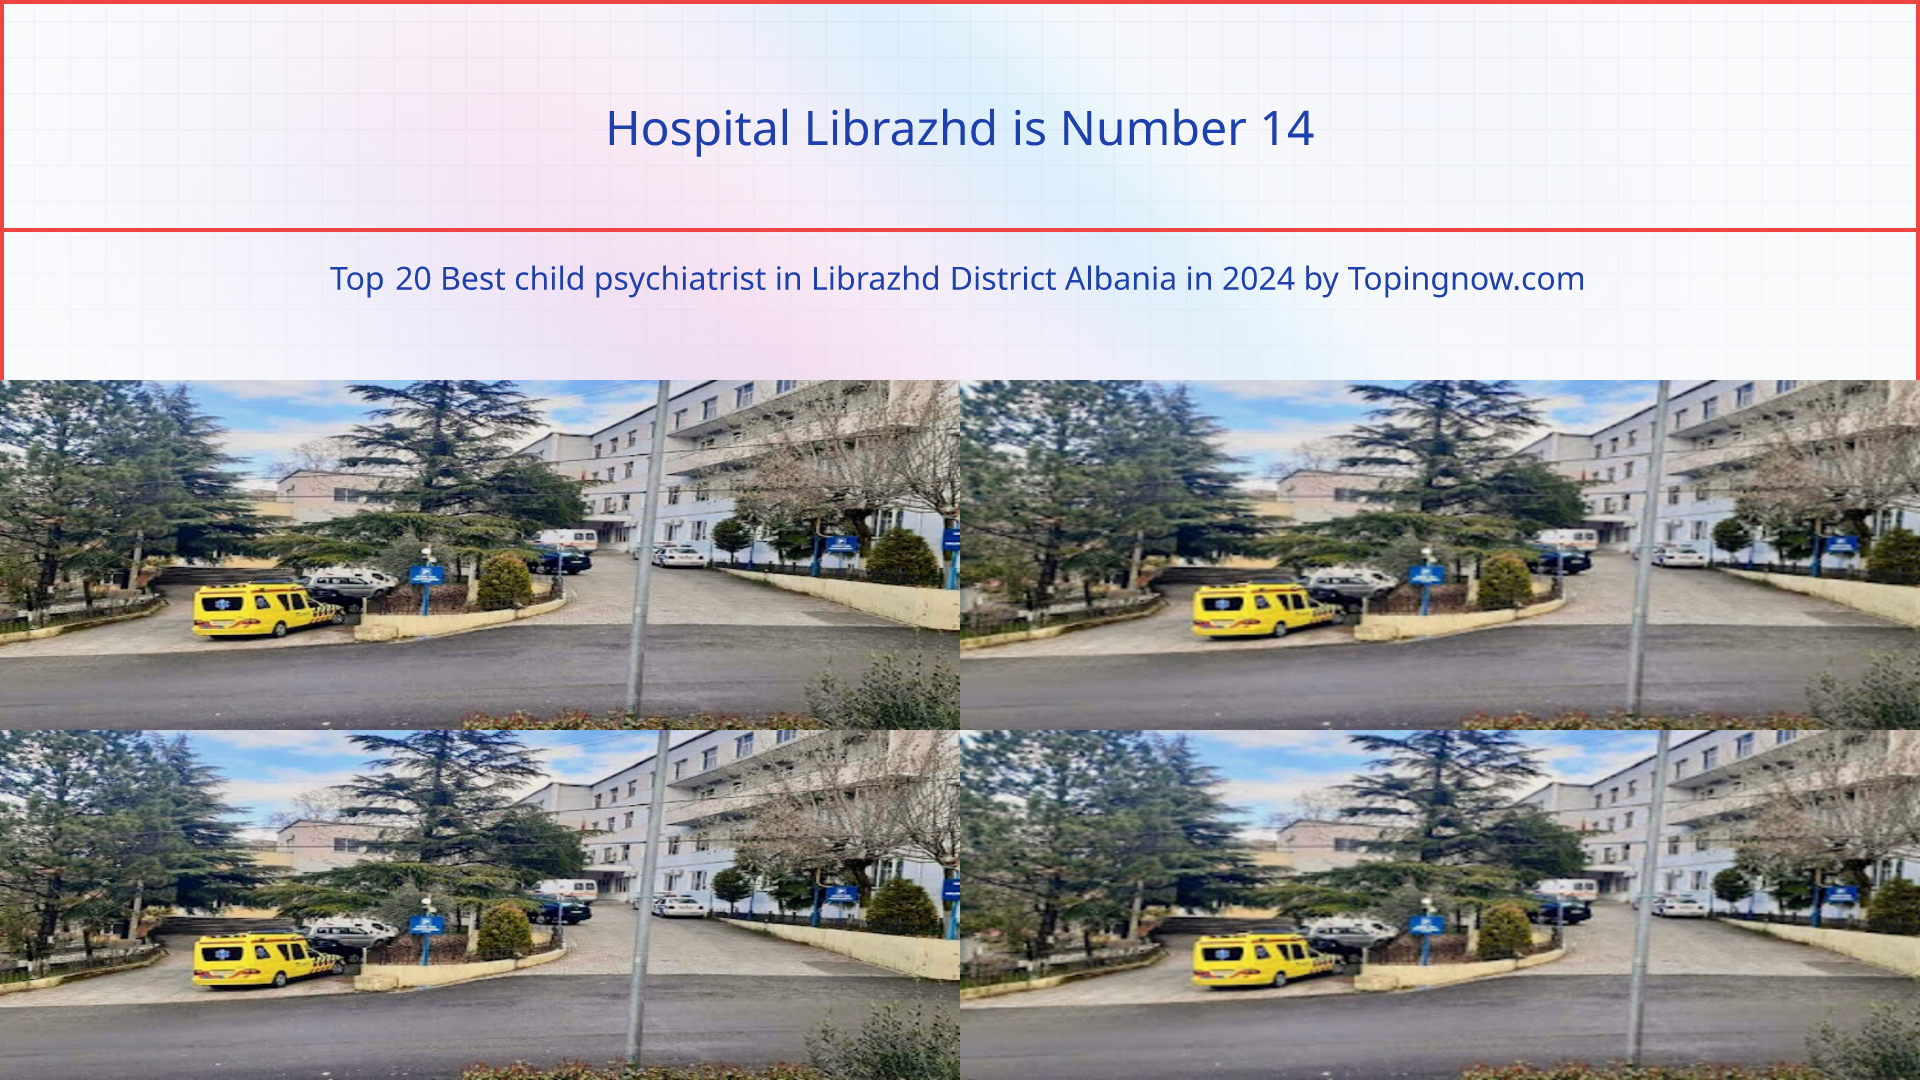 Hospital Librazhd: Top 20 Best child psychiatrist in Librazhd District Albania in 2024